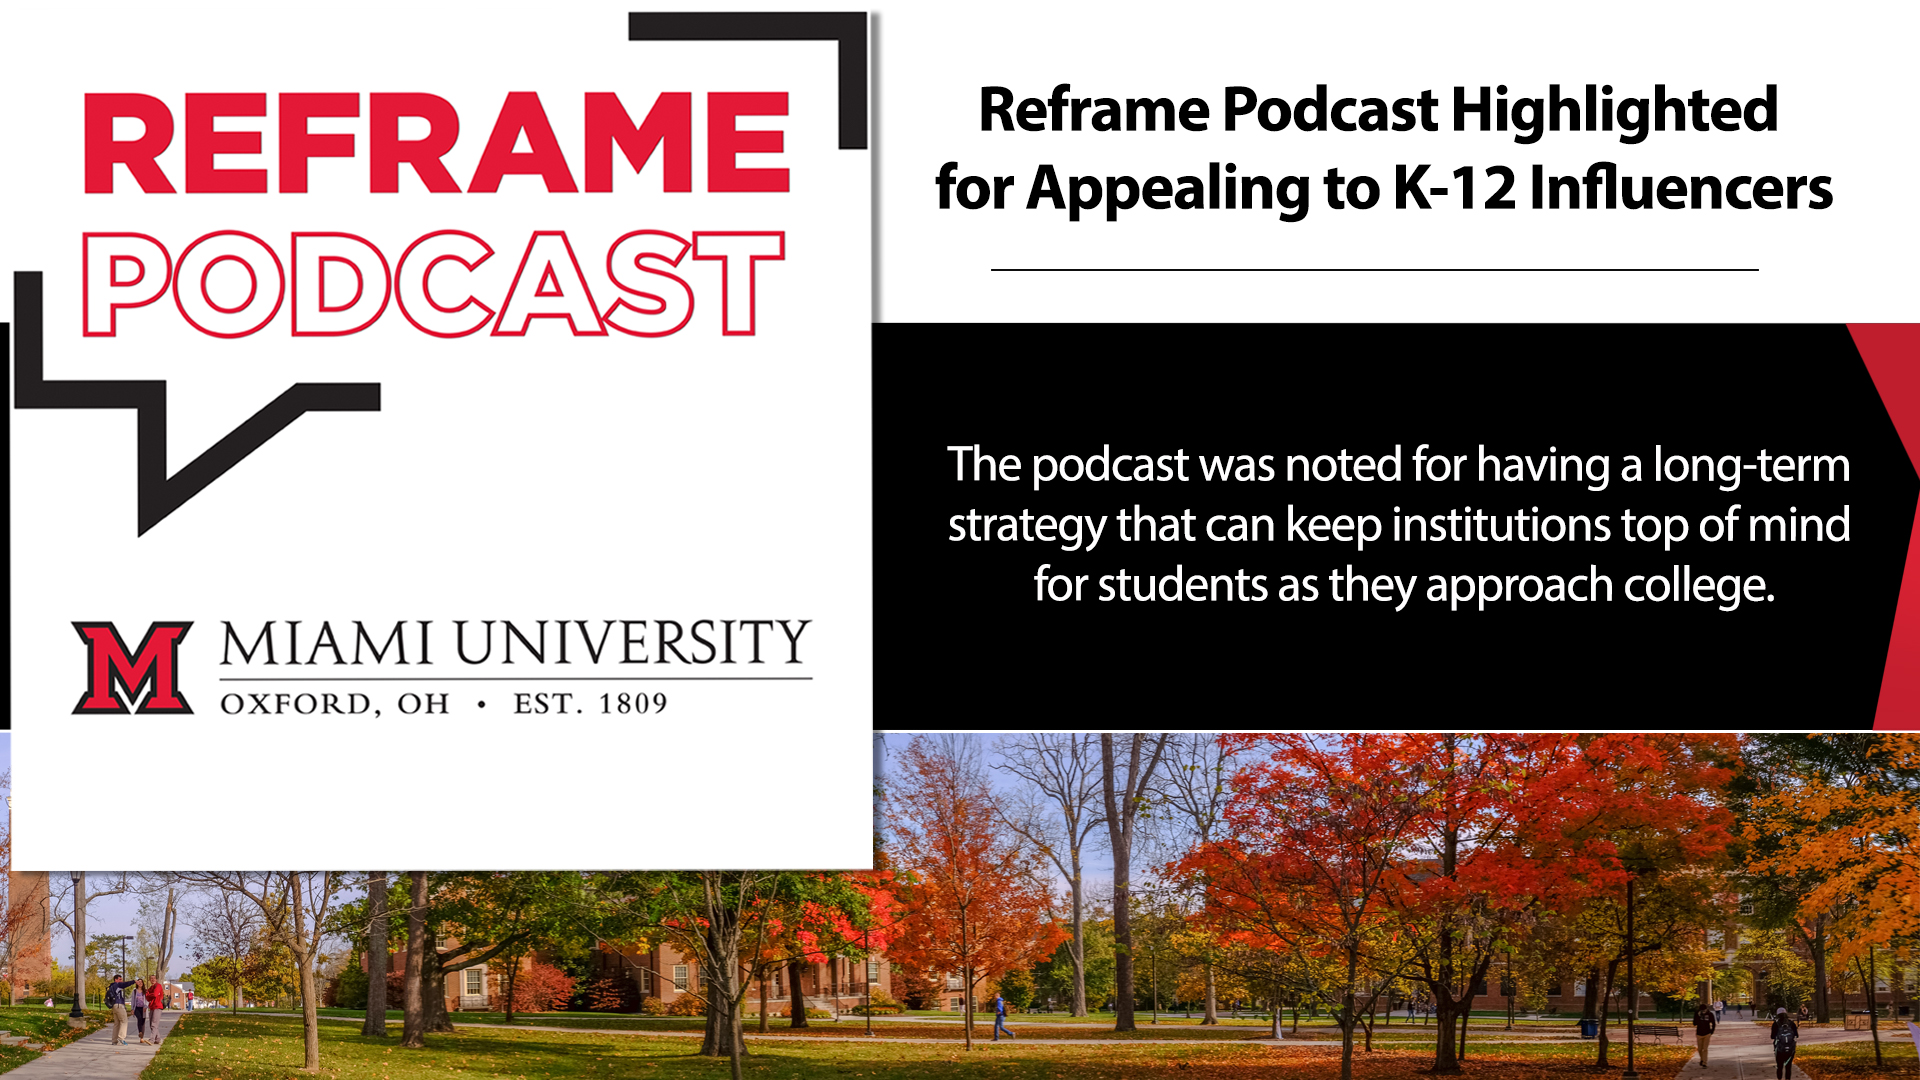 Reframe Podcast Highlighted